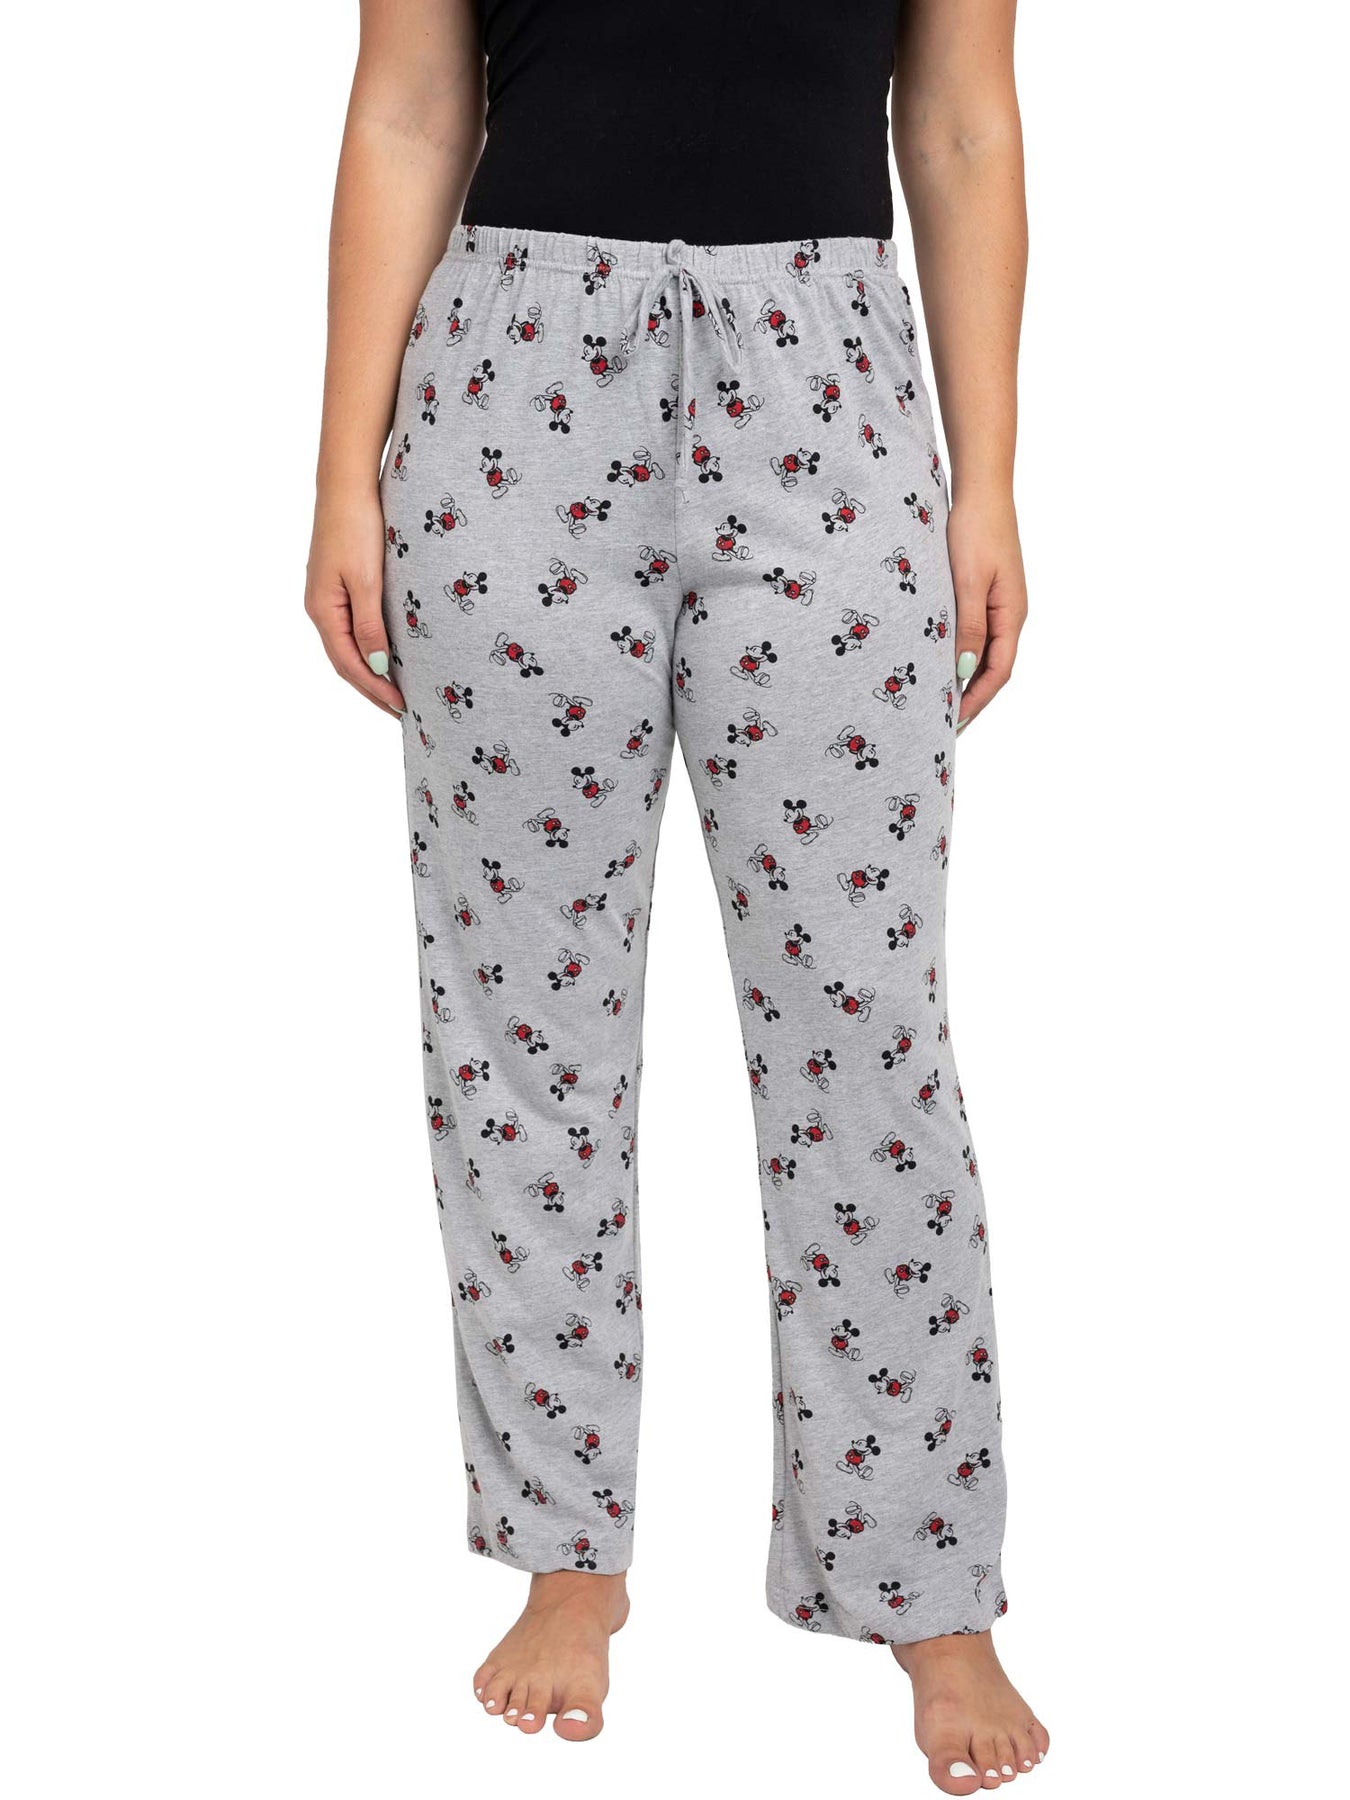 Mickey Mouse print pyjama trousers